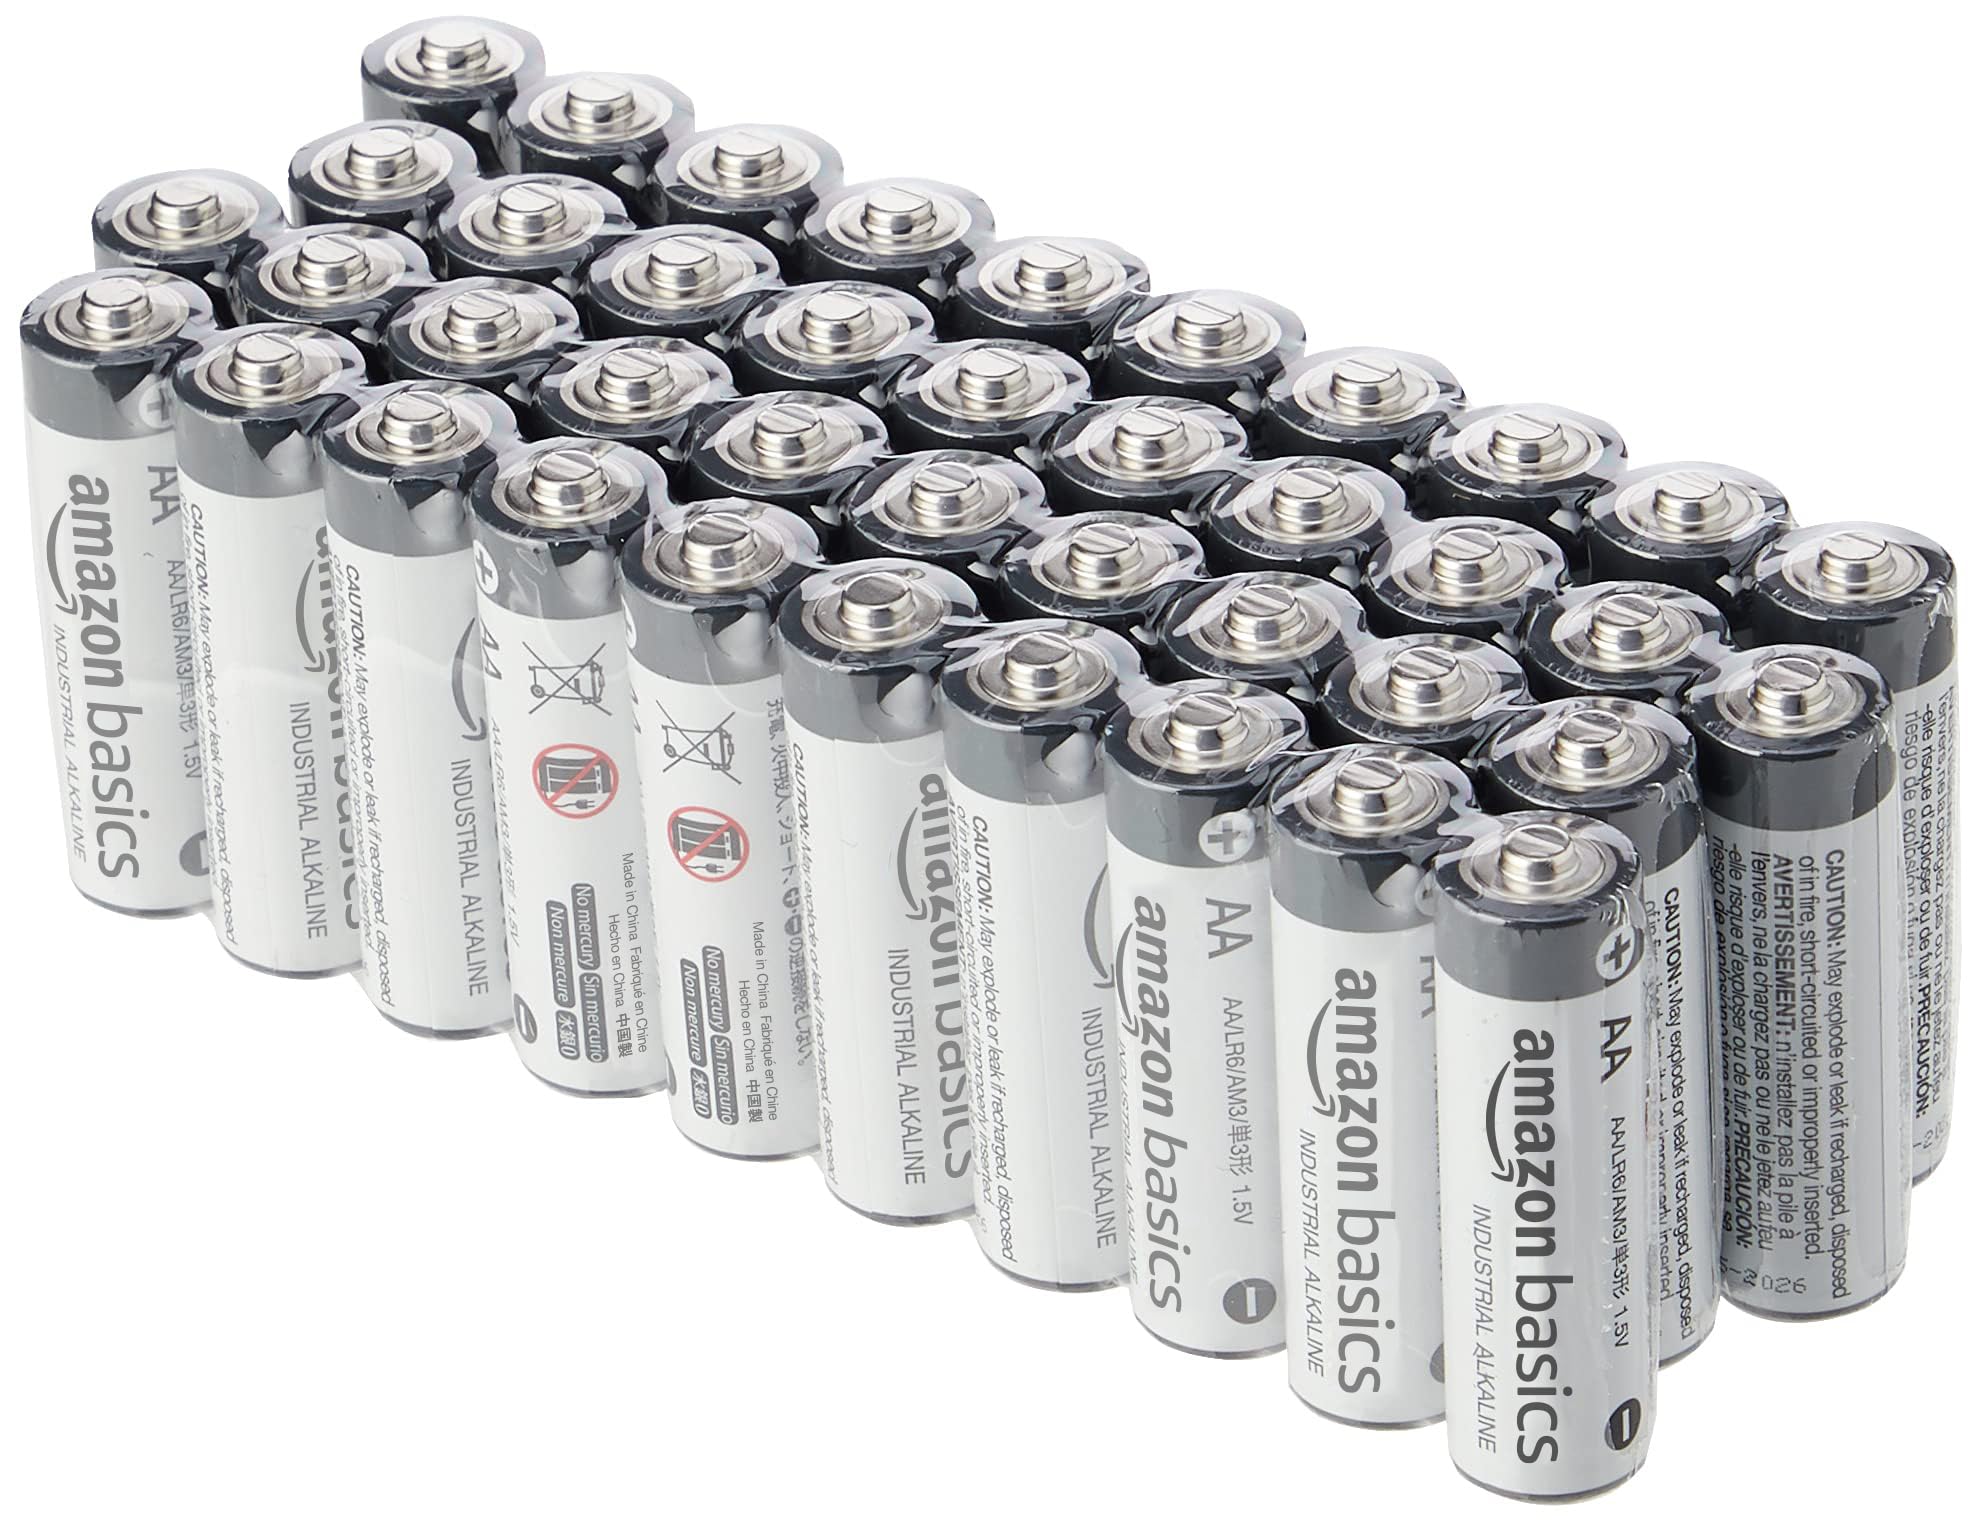 Amazon Basics AA Alkaline Batteries, Industrial Double A, 5-Year Shelf Life, 40-Pack $6.46